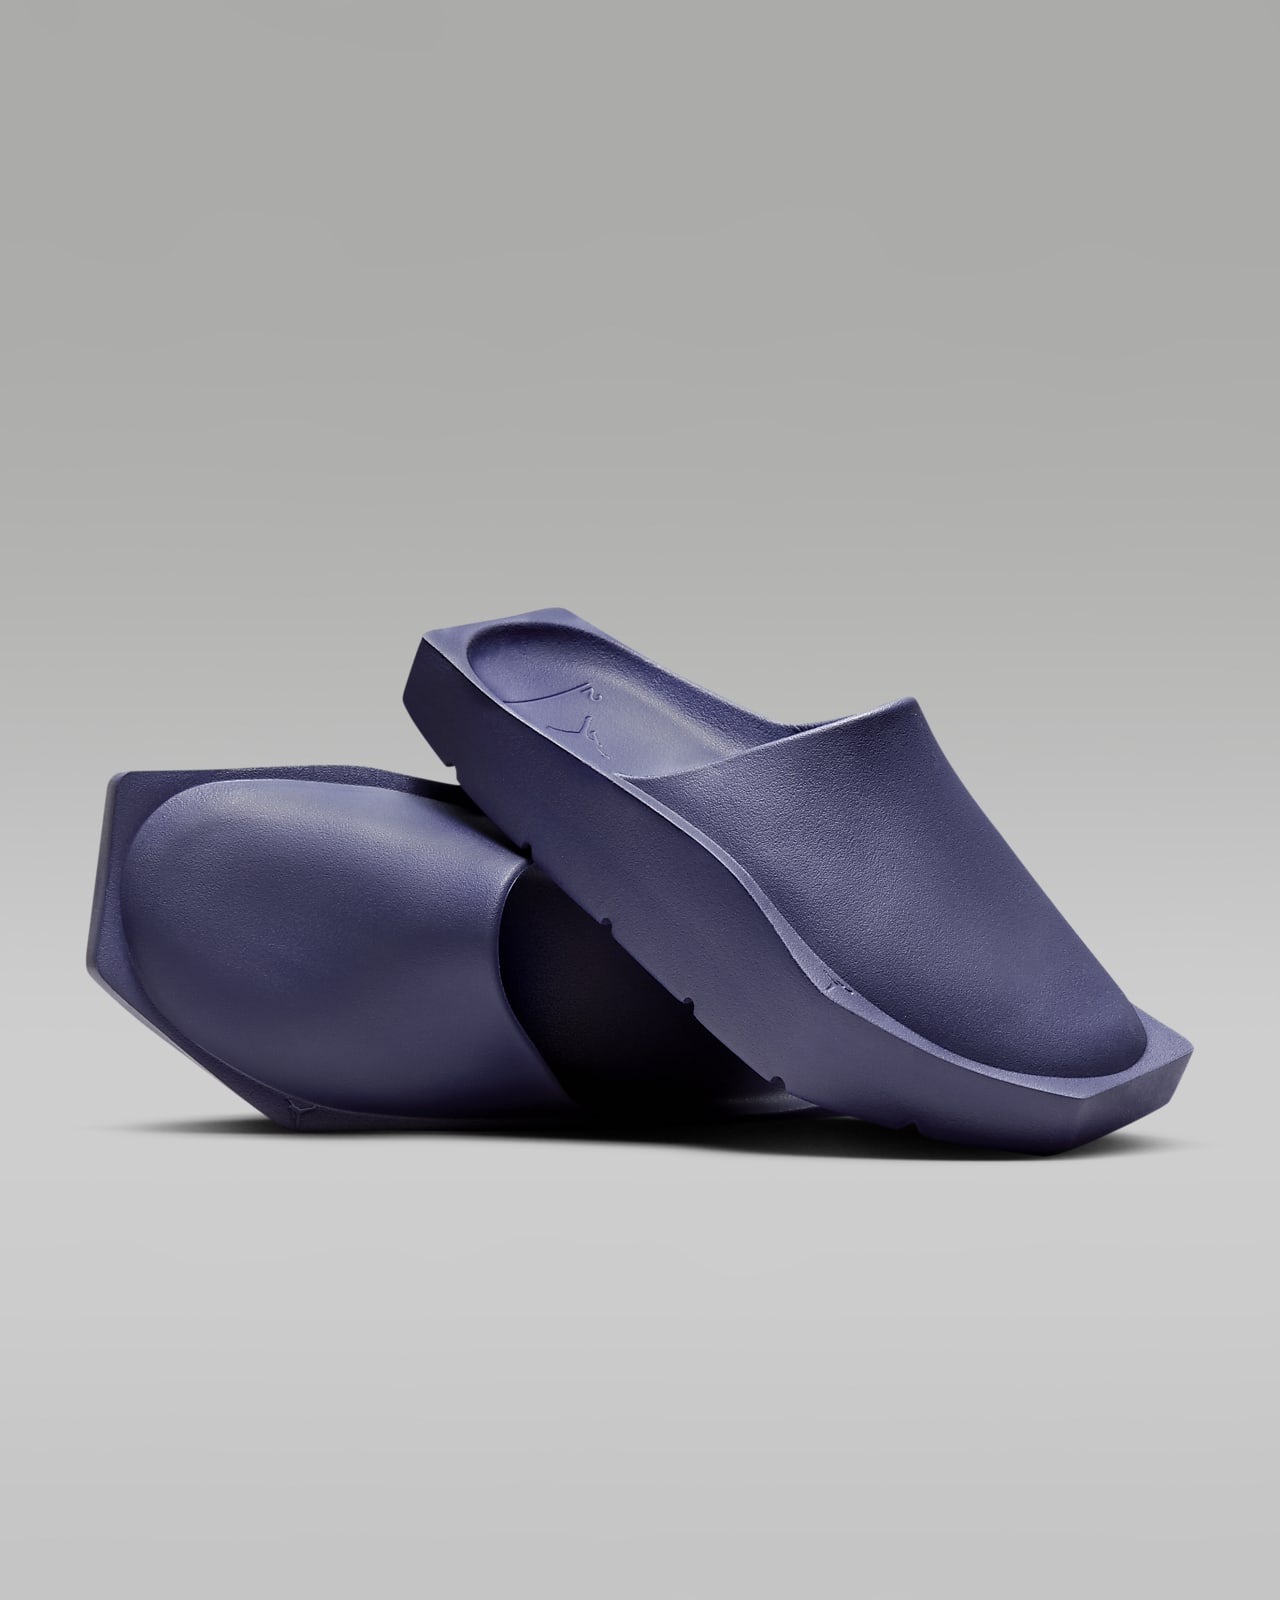 Yoga Slippers - Sandals purple